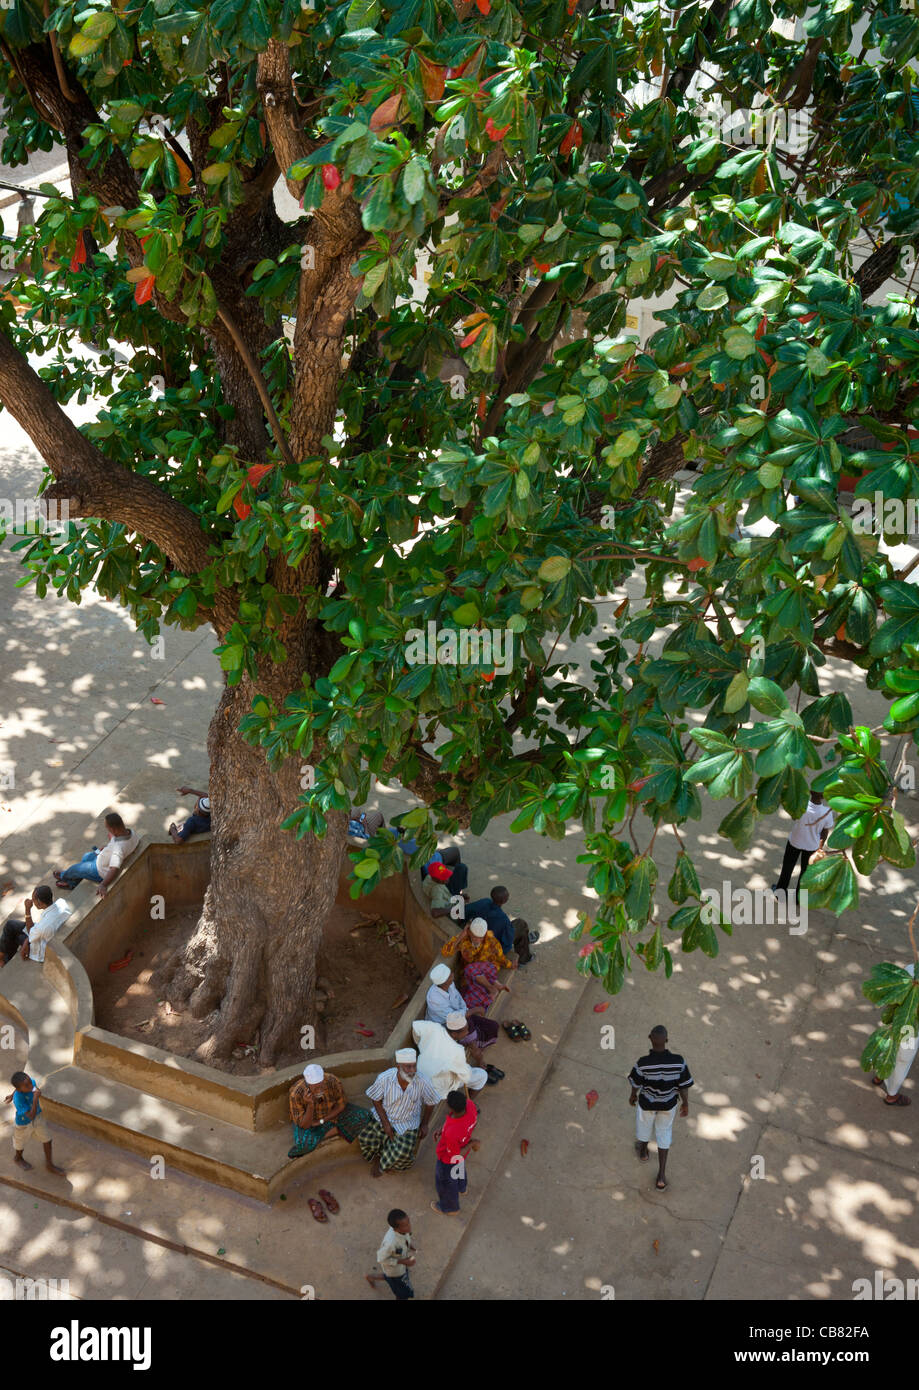 People Lazing On Lamu Square, Kenya Stock Photo